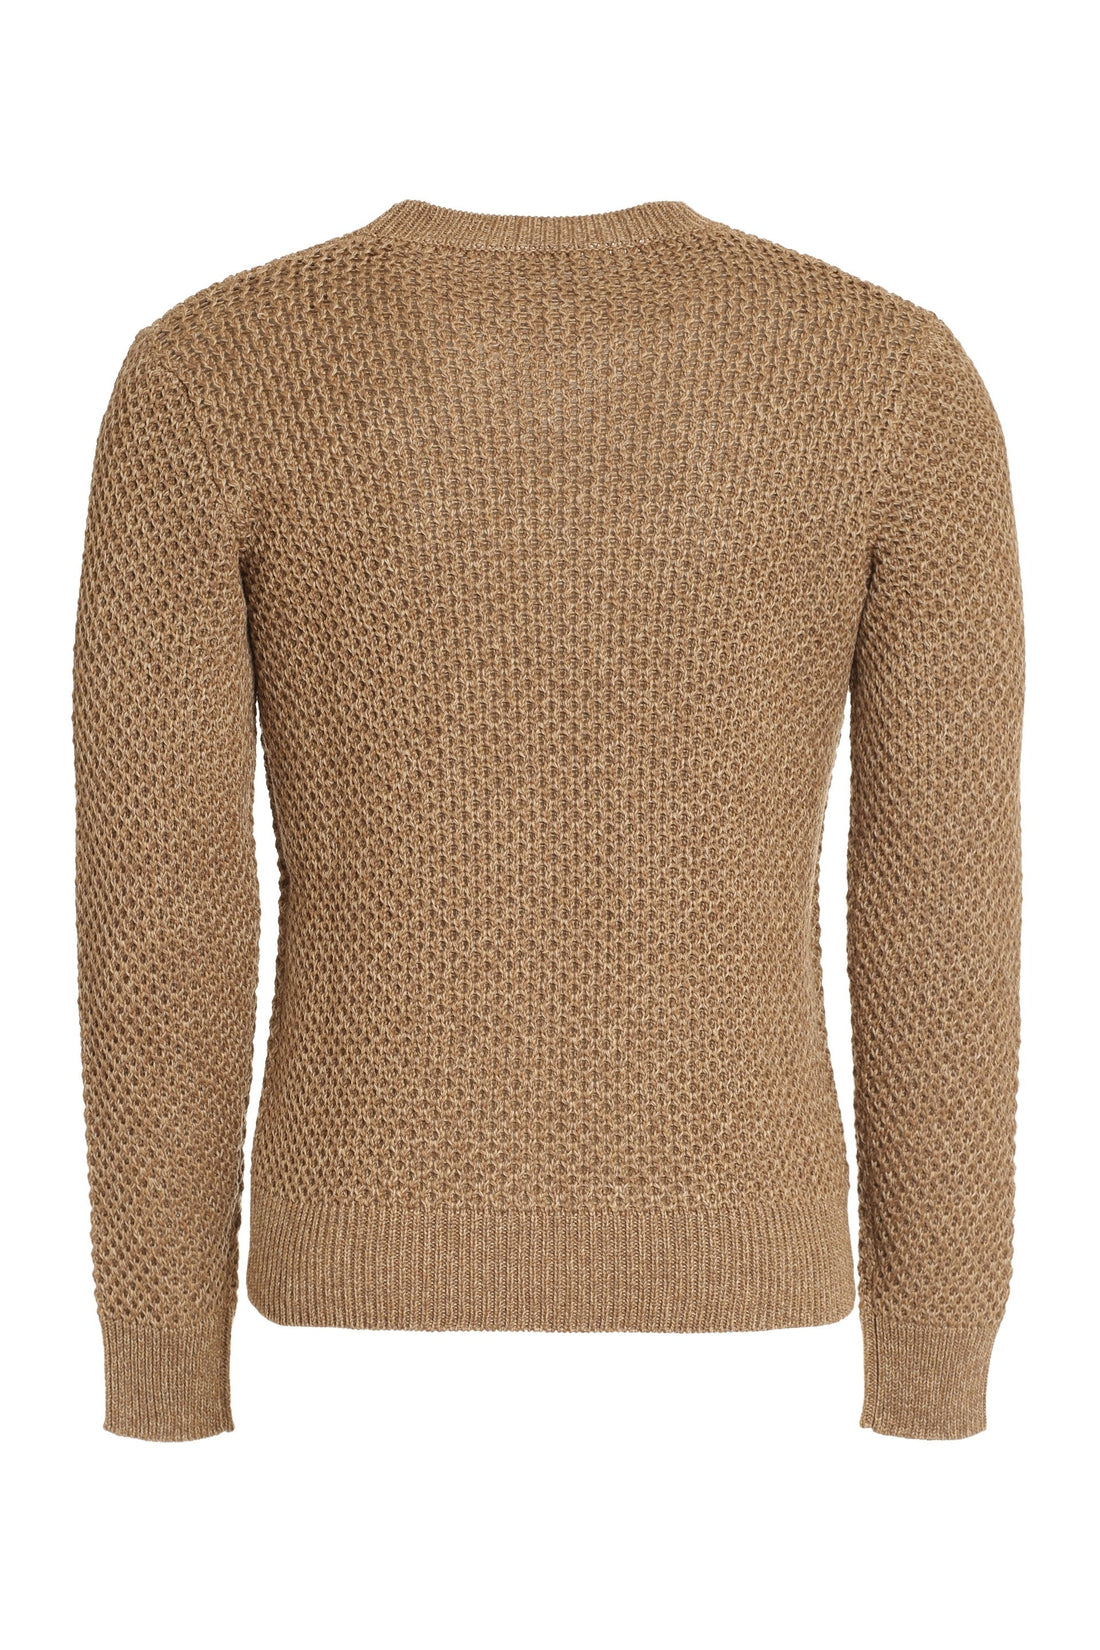 Roberto Collina-OUTLET-SALE-Merino wool sweater-ARCHIVIST